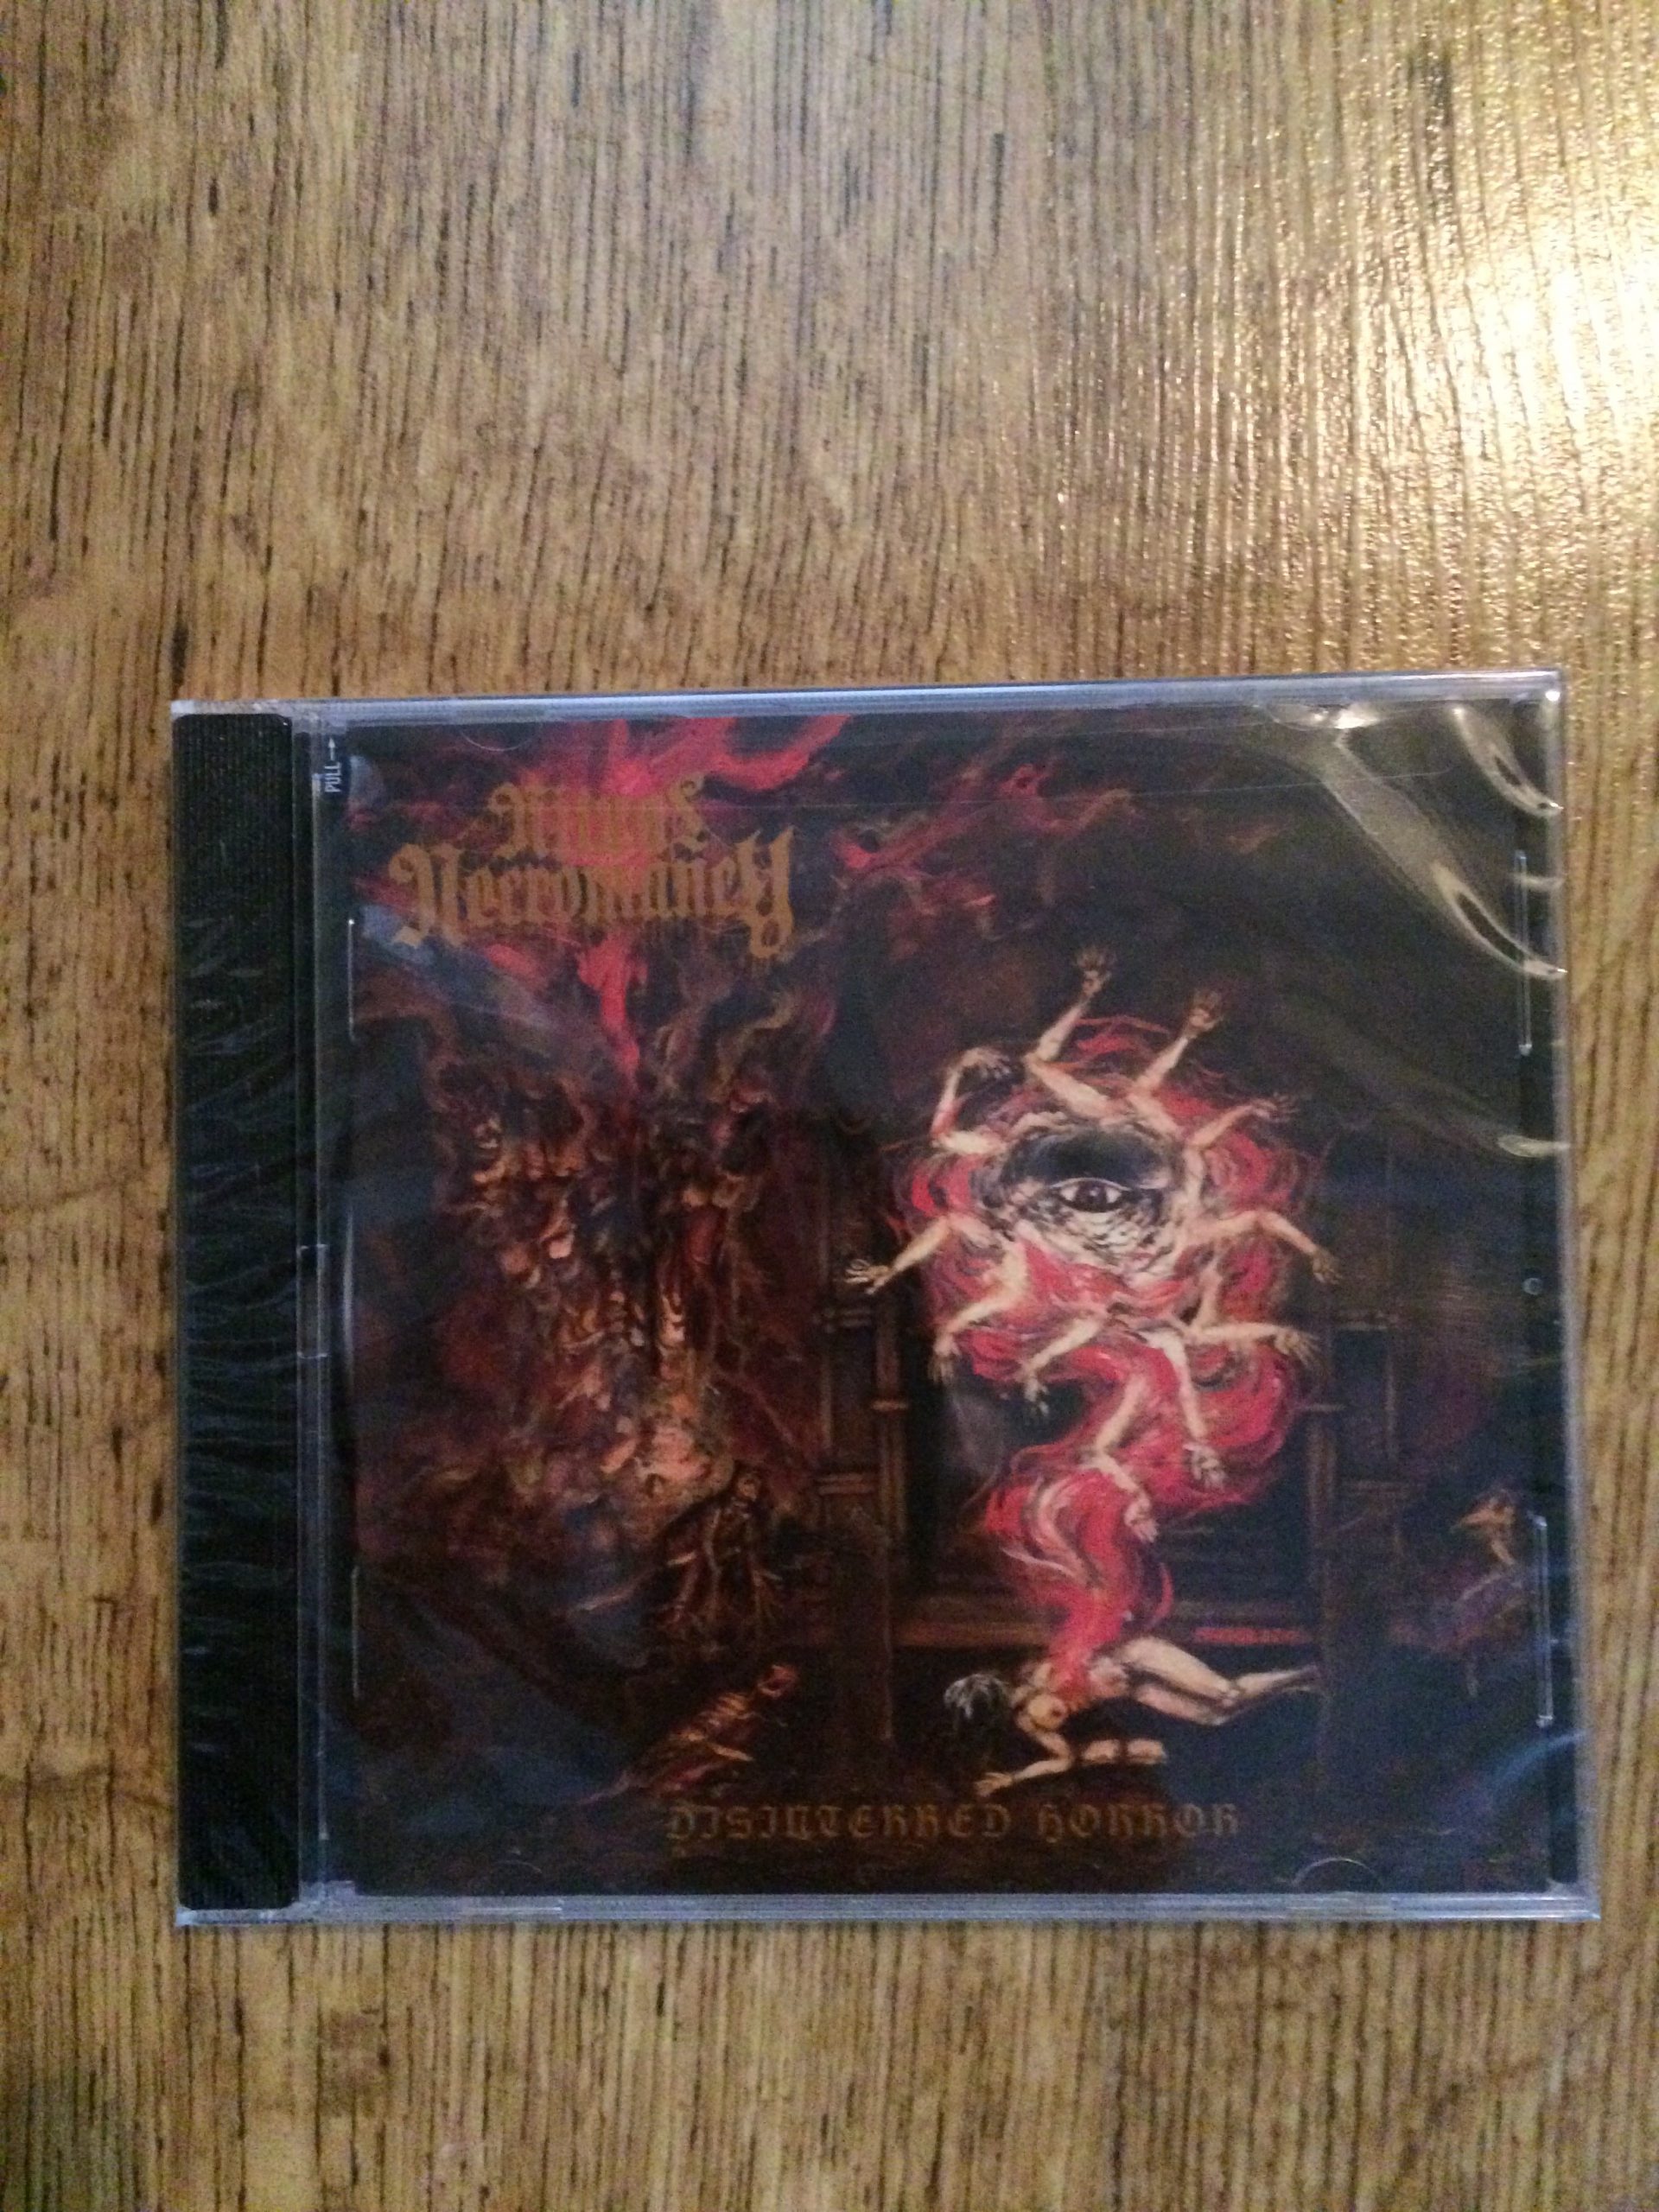 Photo of the Ritual Necromancy - "Disinterred Horror" CD